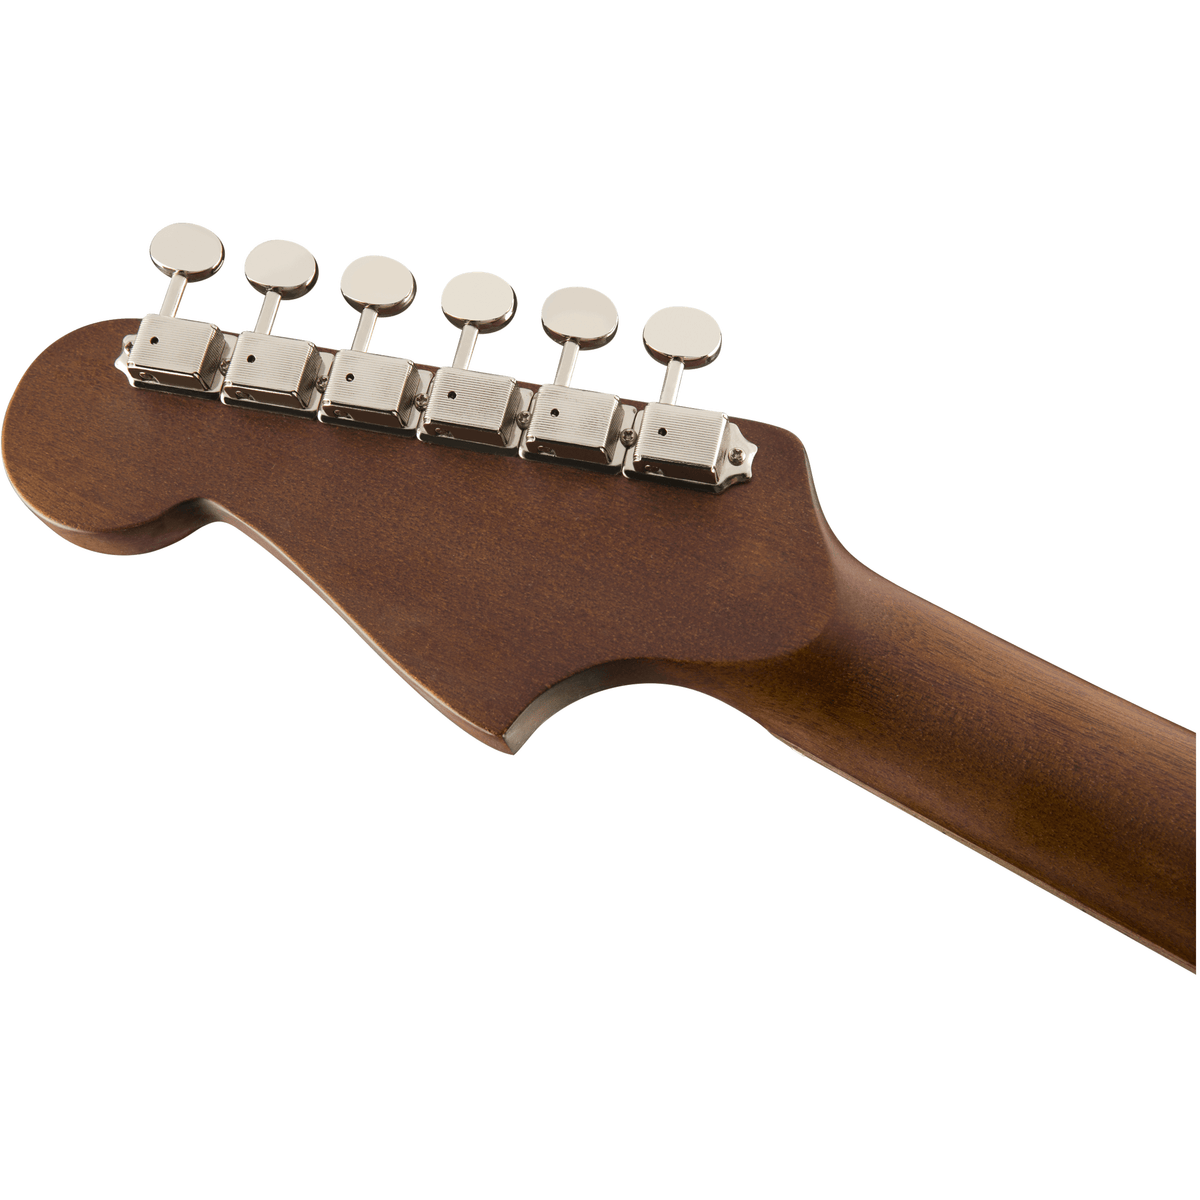 Fender Guitar Fender Malibu Player Acoustic/Electric Guitar Short Scale Aqua Splash - Byron Music